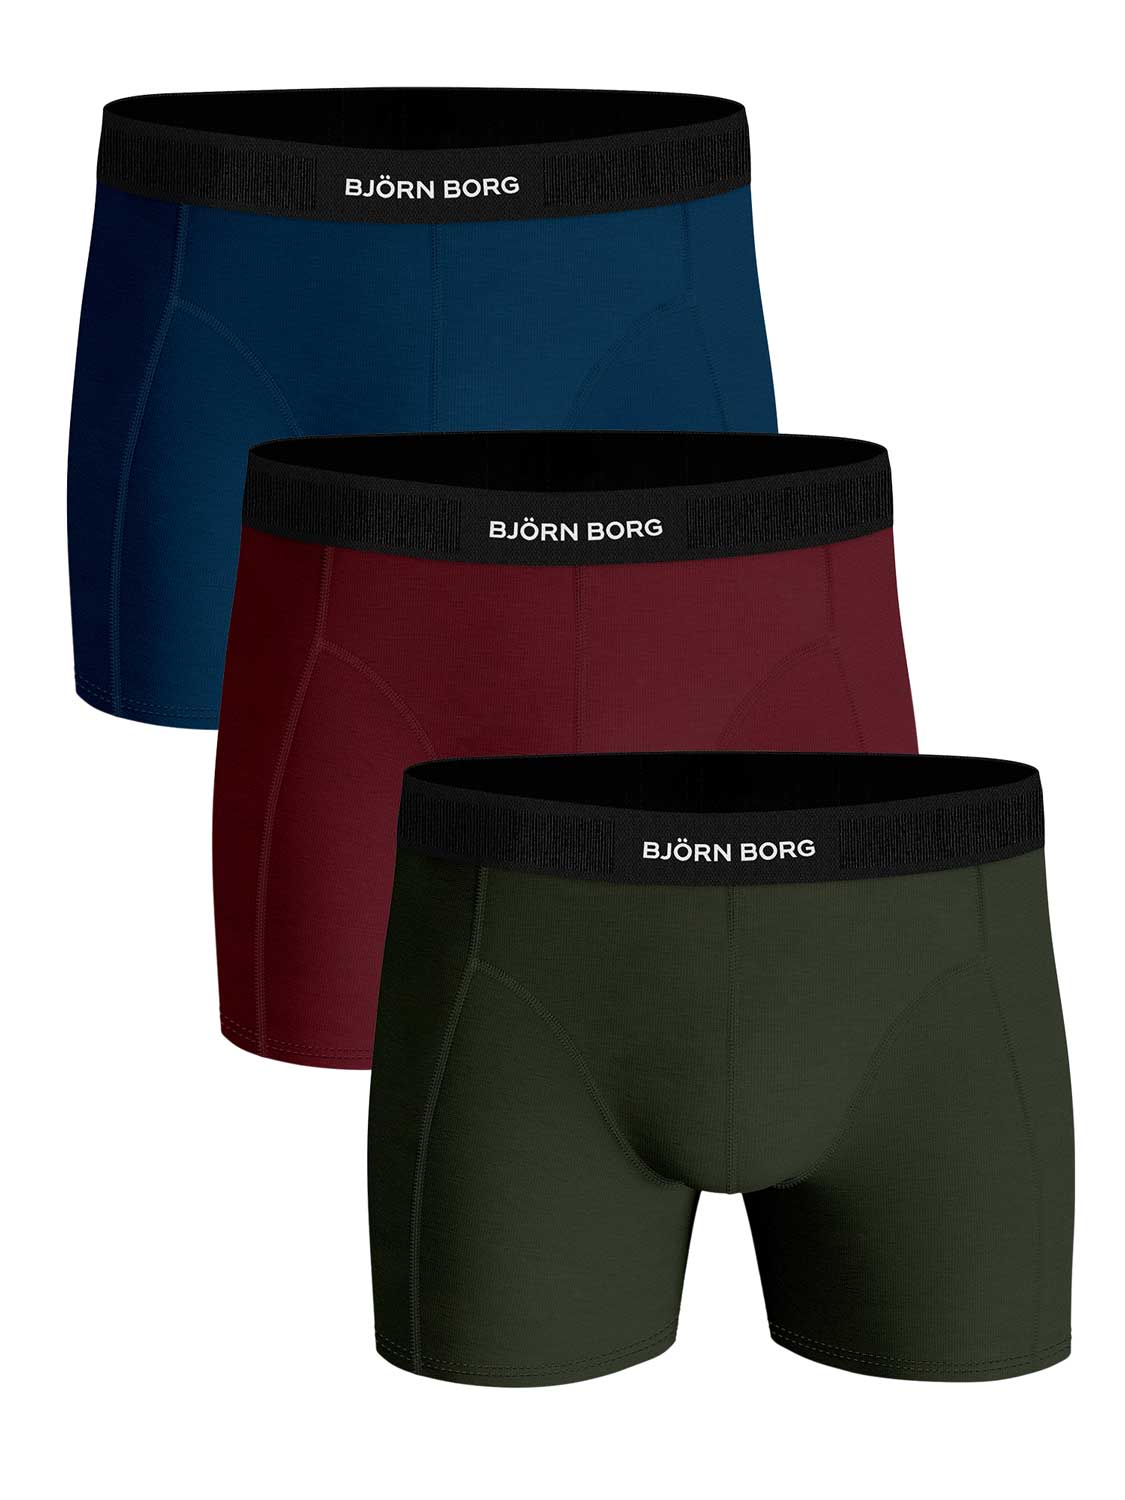 Premium Cotton Shorts - 3 pack